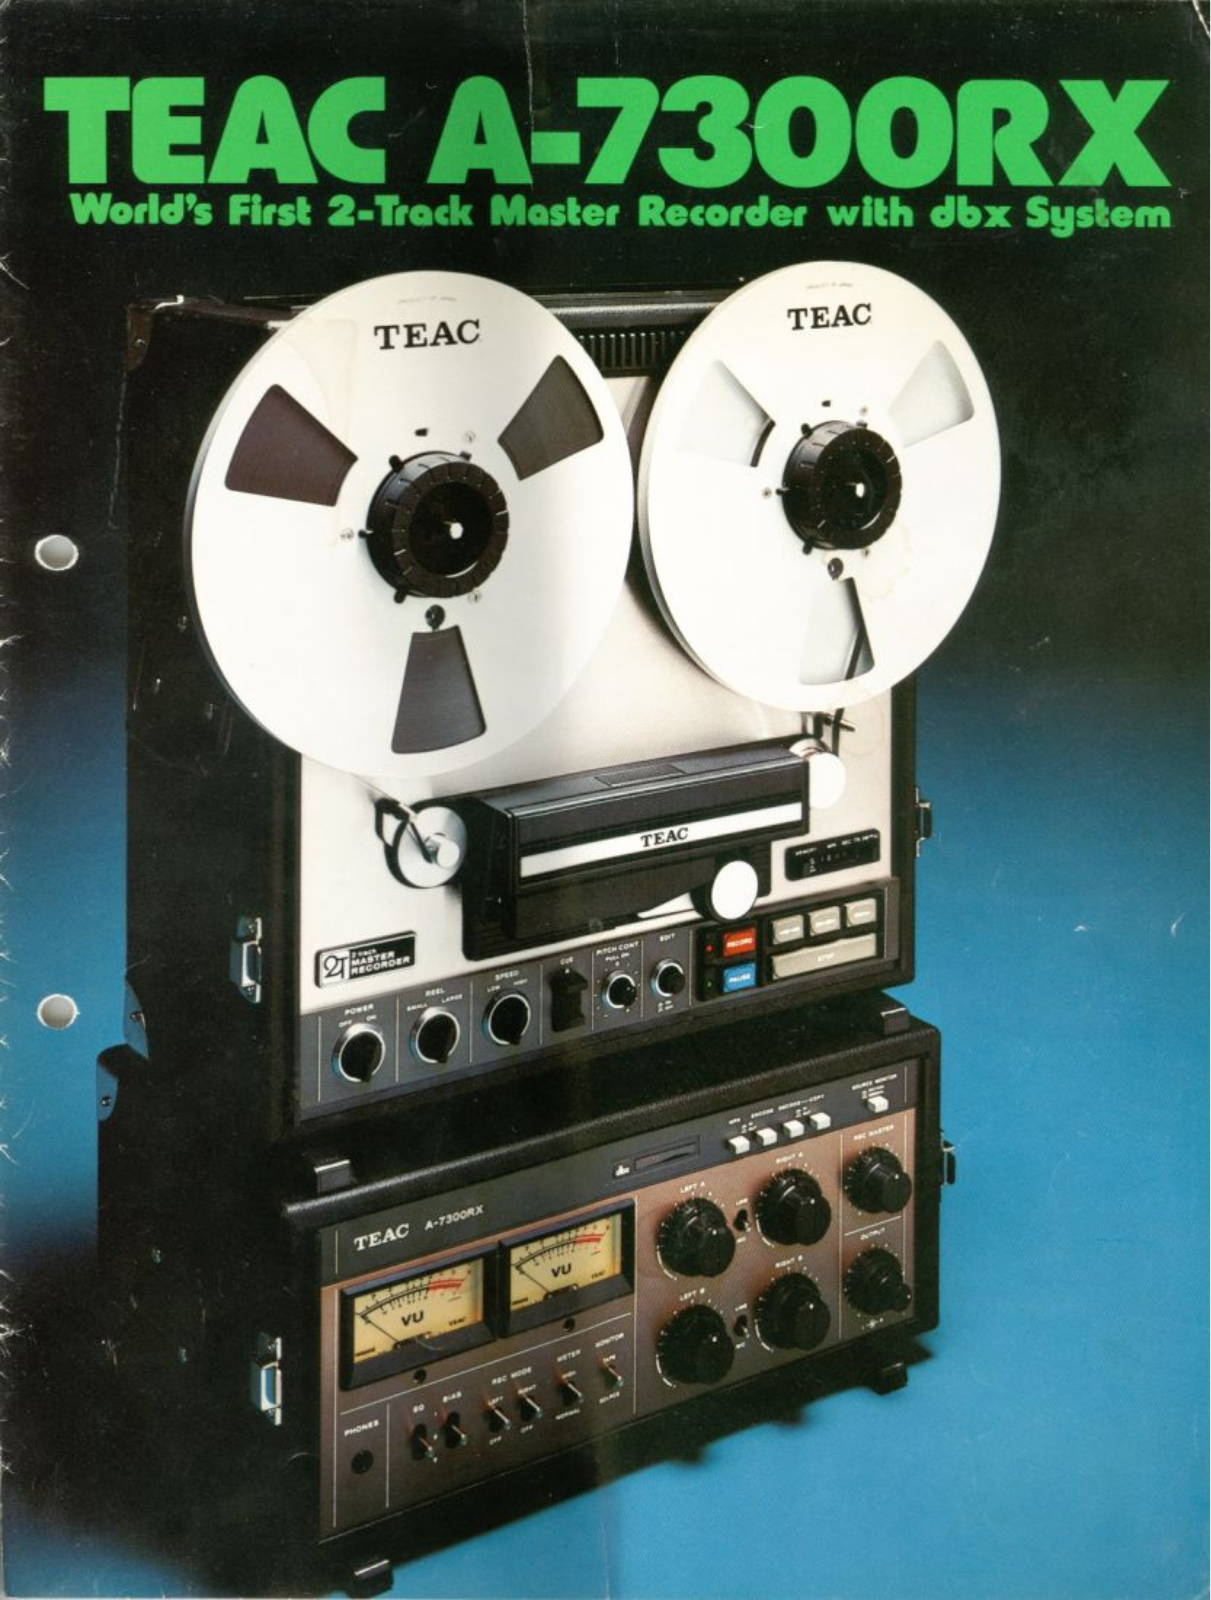 TEAC A-7300-RX Brochure